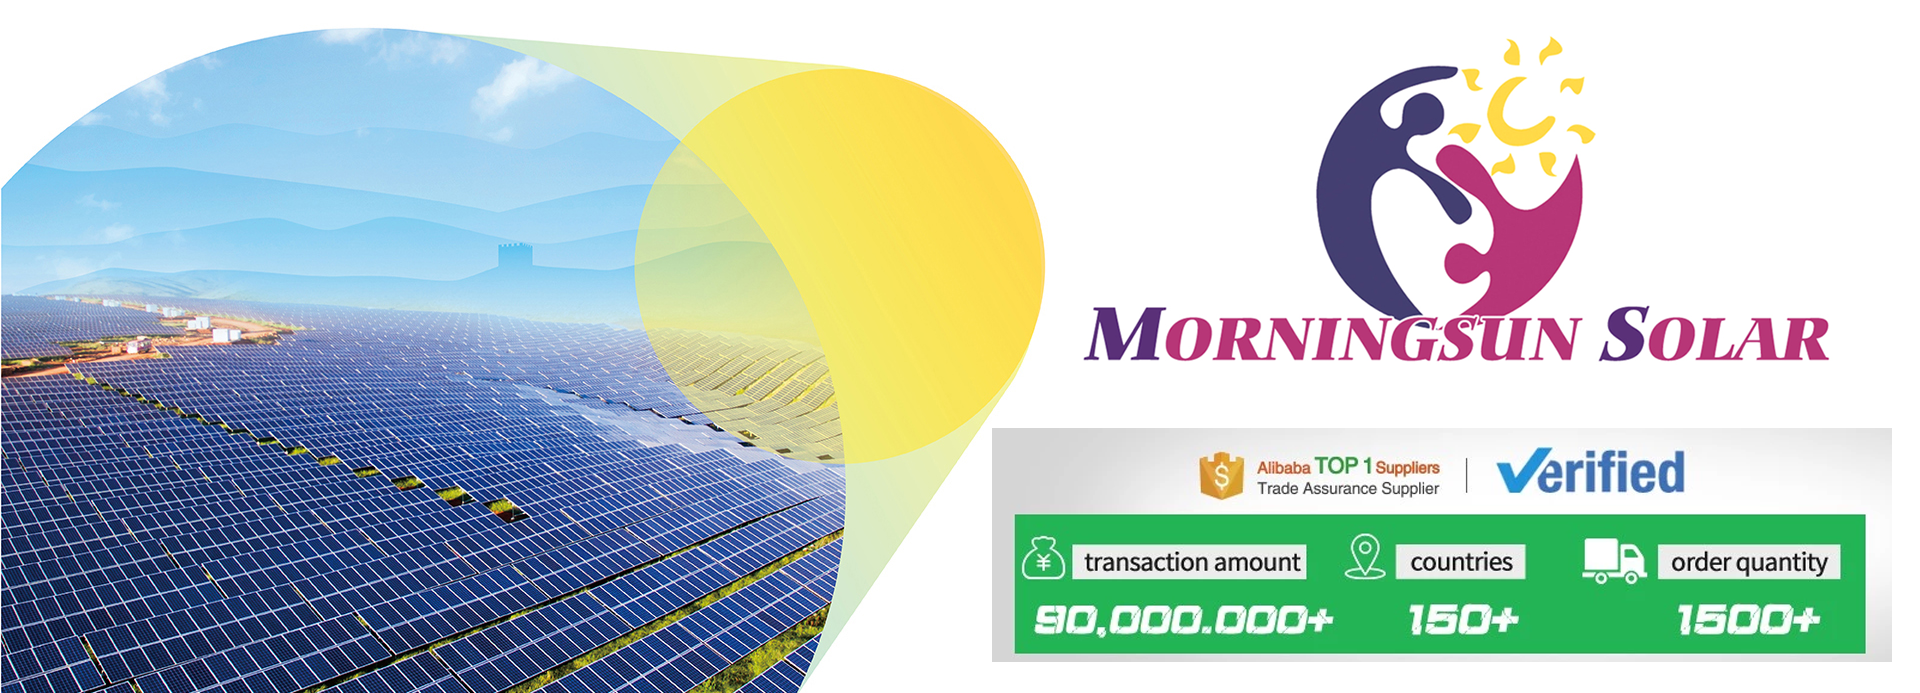 Solar panel 50 watt w Monocrystalline